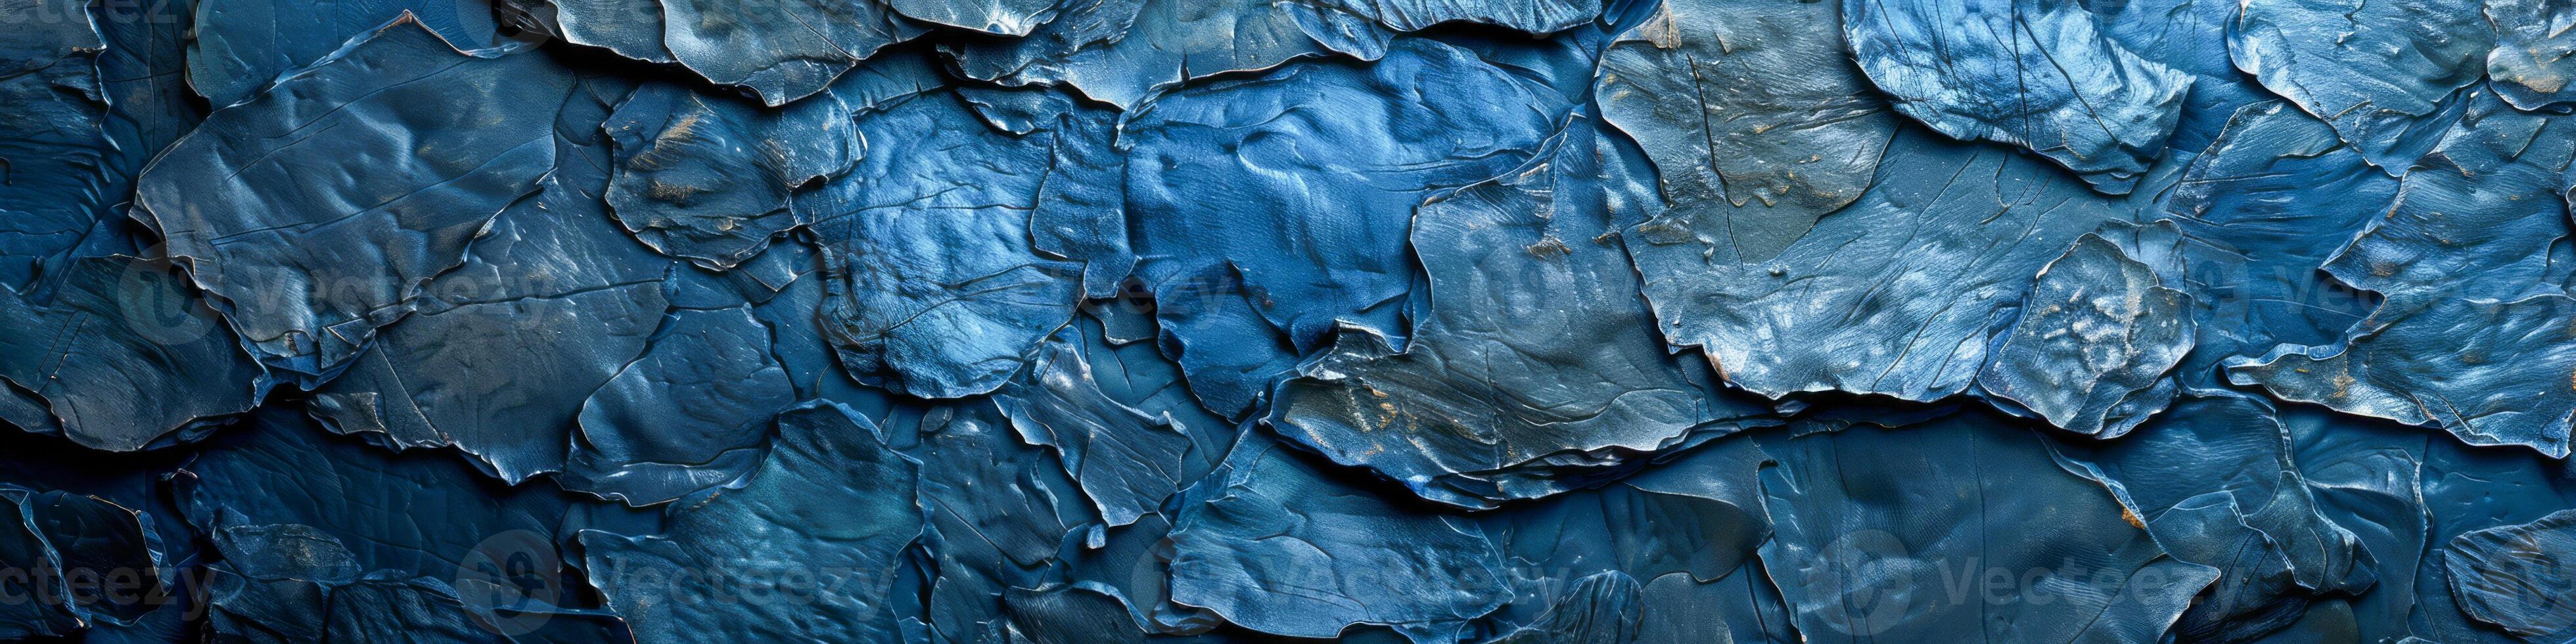 strutturale sfumature di blu pietra strati nel naturale modelli foto